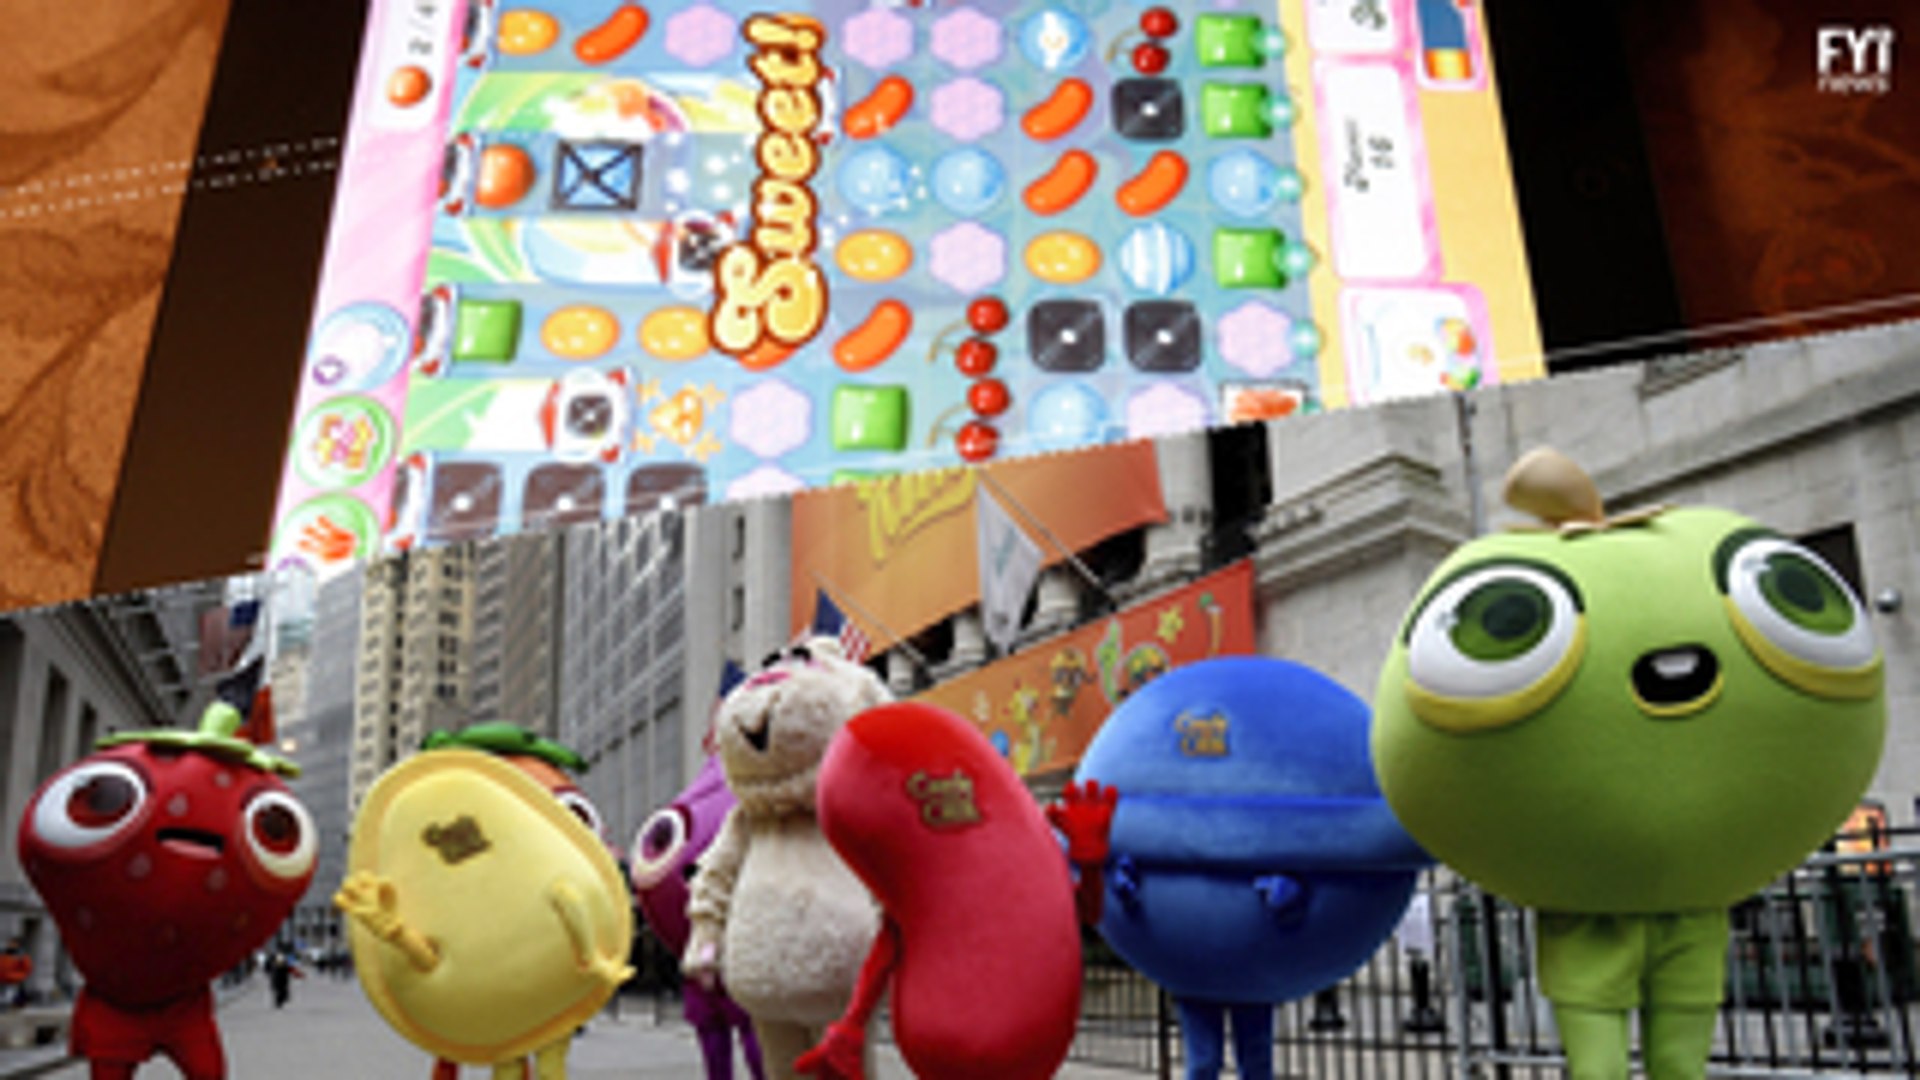 11 jogos puzzle para viciados em Candy Crush (Android / iOS / Windows Phone  / Facebook) - Baixaki 